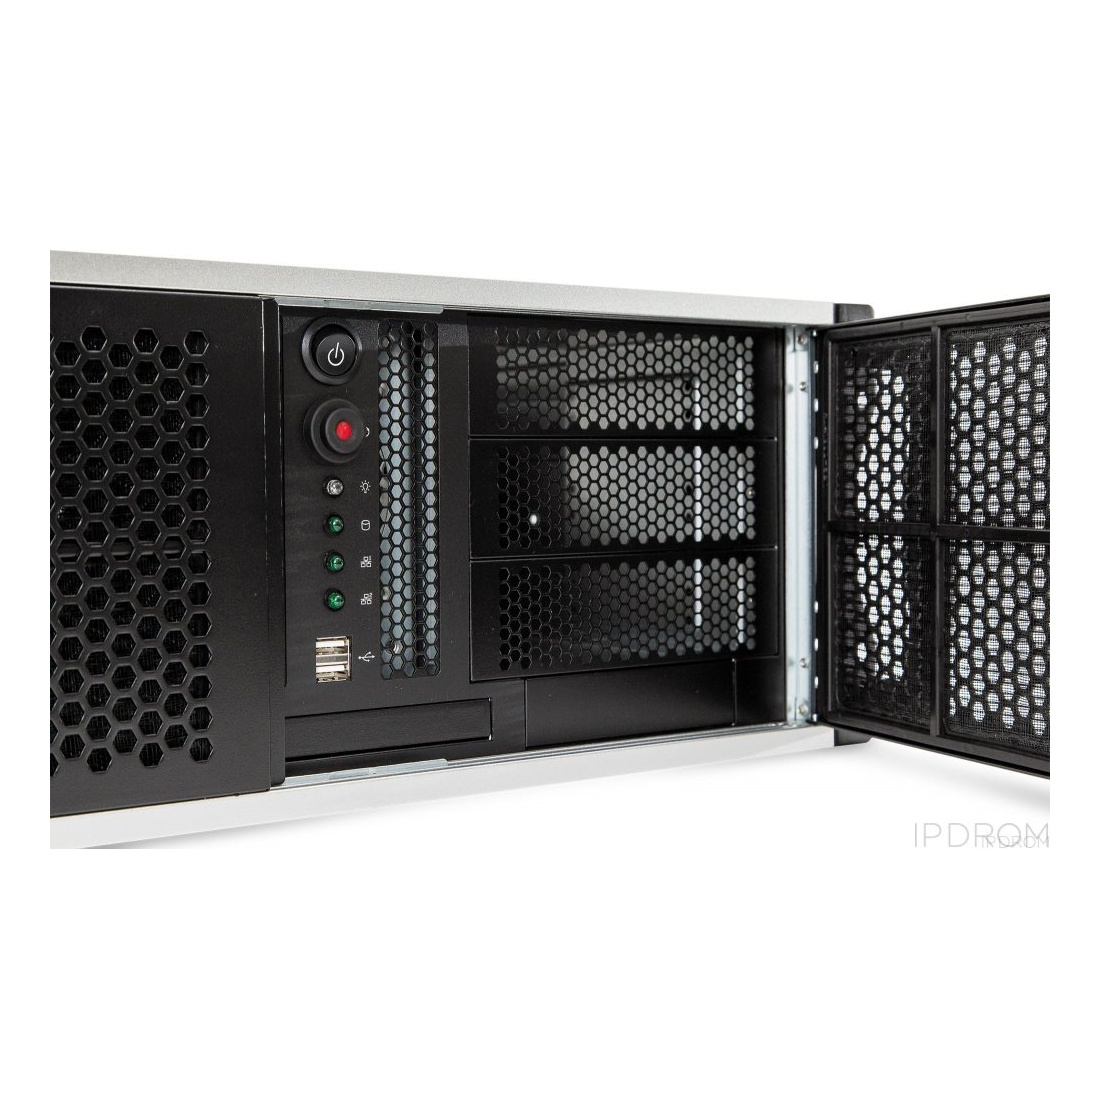 Сервер IPDROM Pro (P-8-РД-Б-6/БР-2Э) 2022